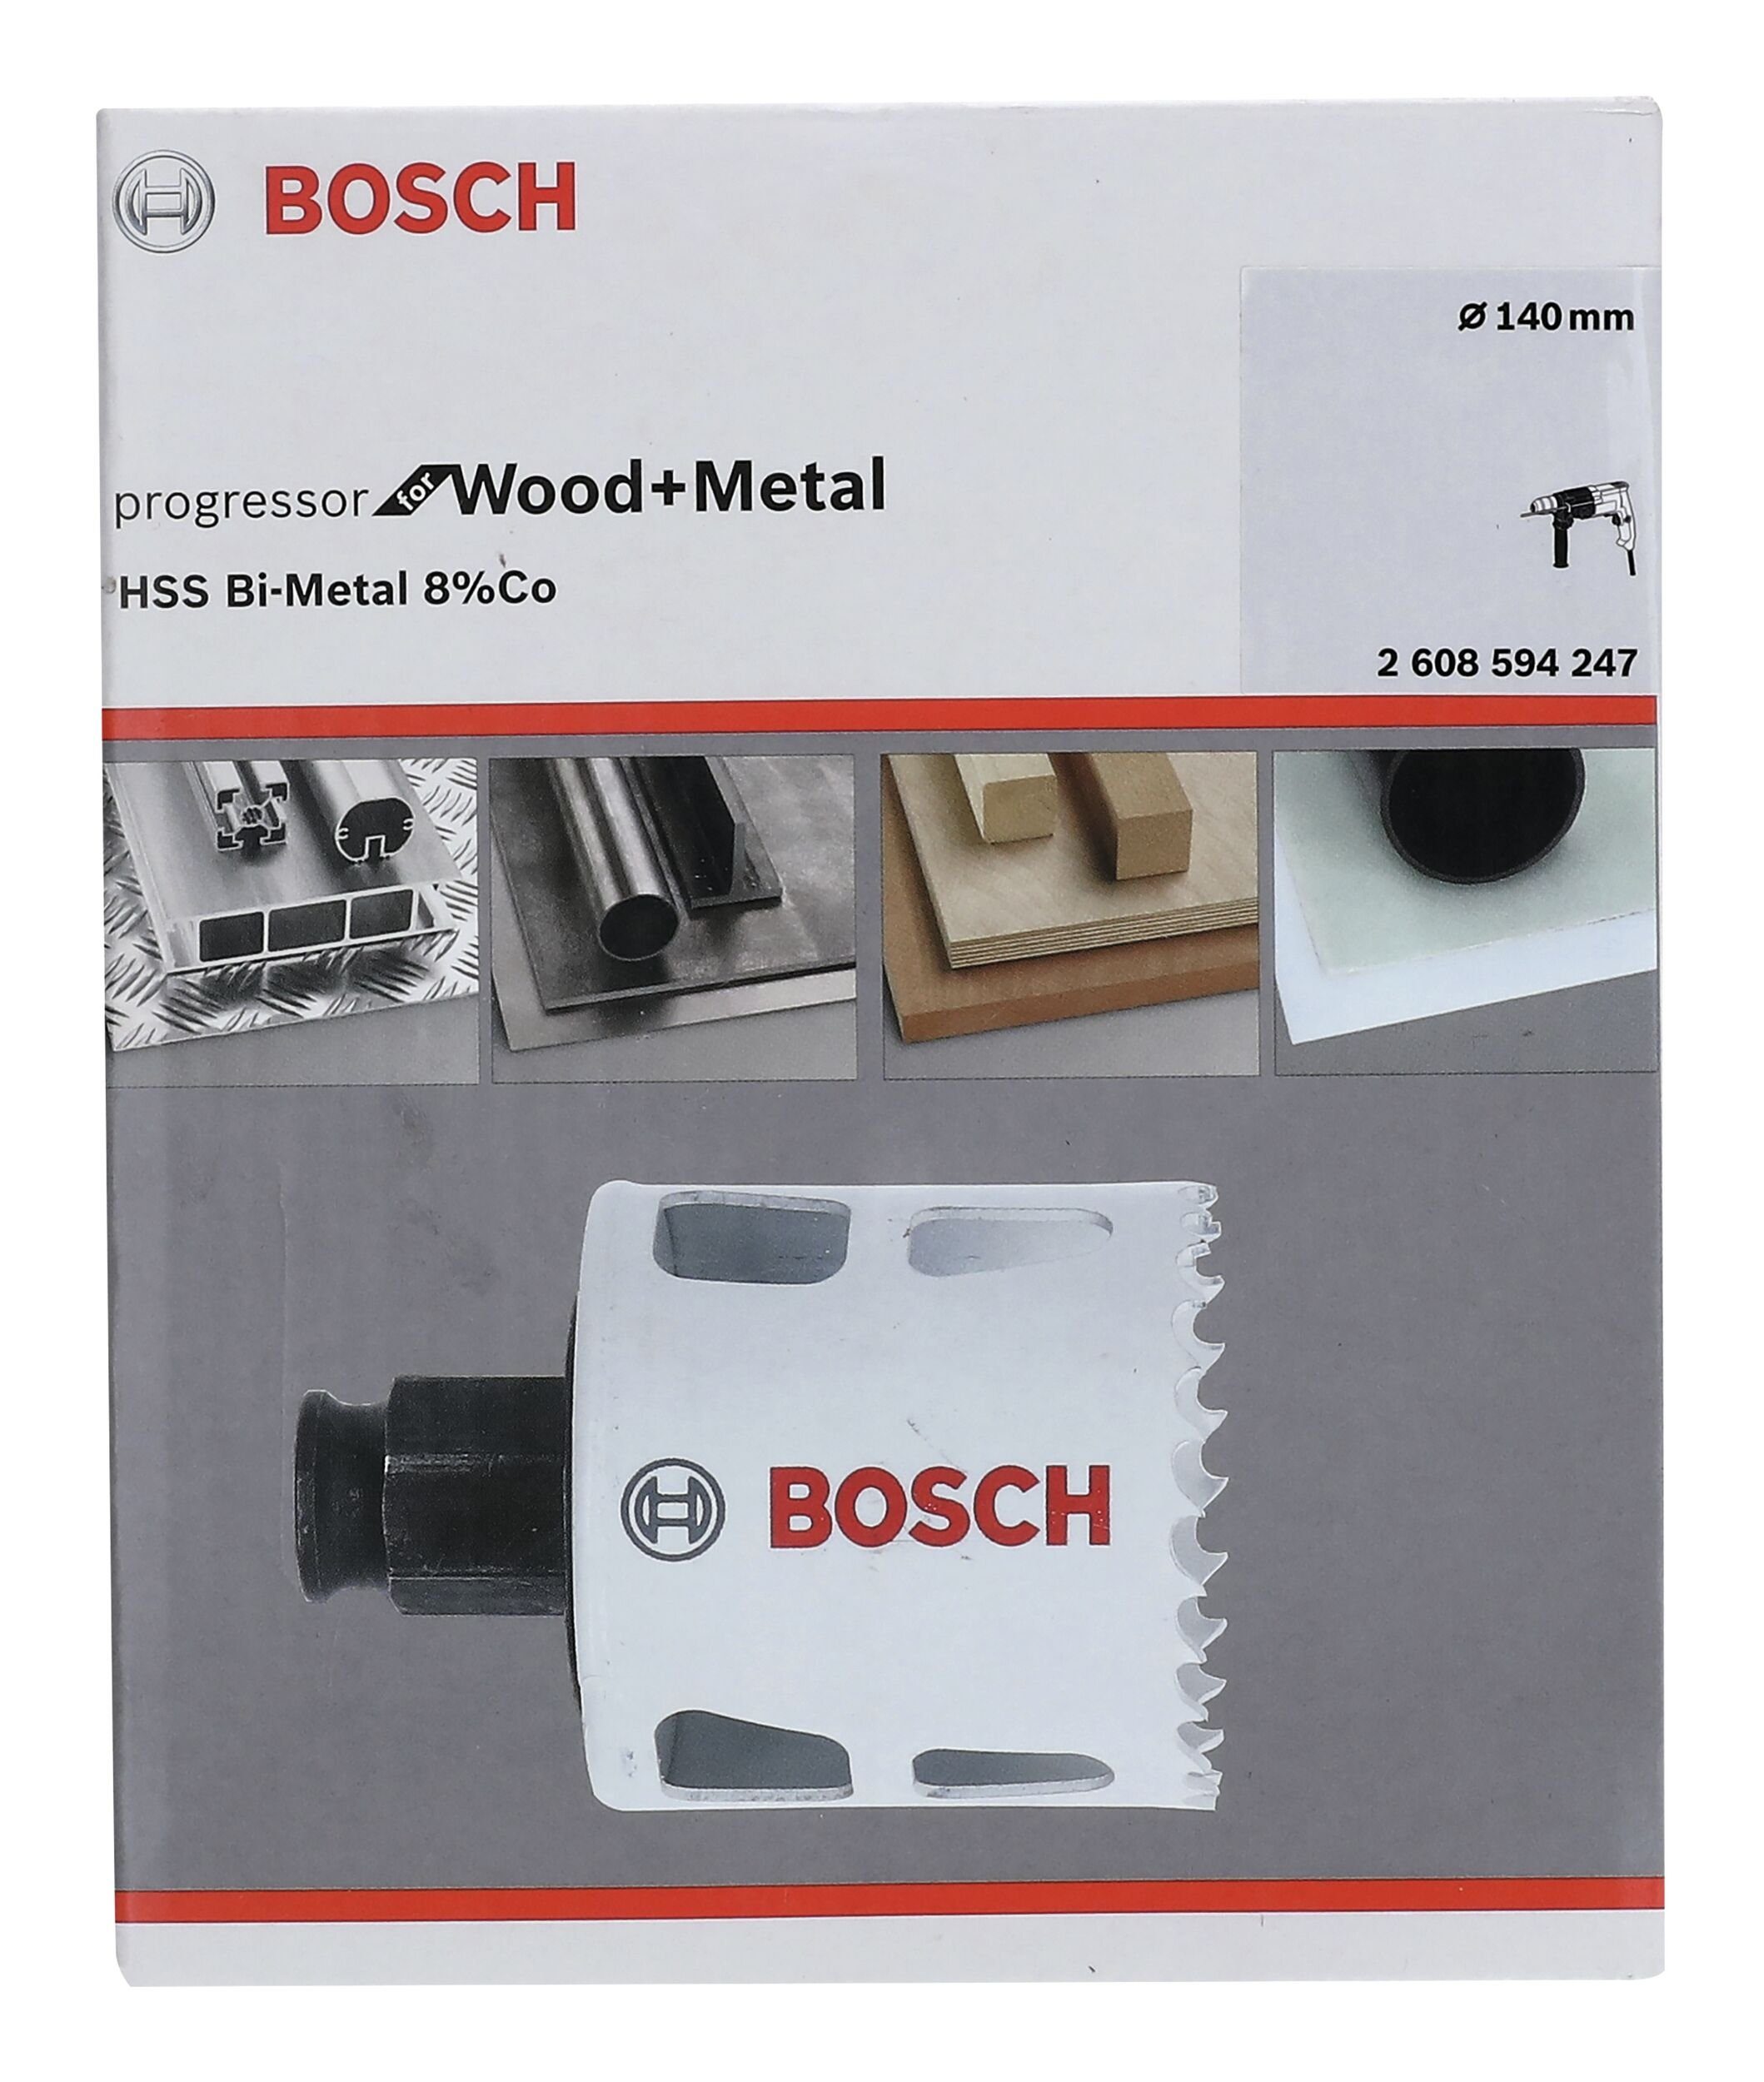 Lochsäge, and Wood 177 mm, Metal Progressor Ø BOSCH for